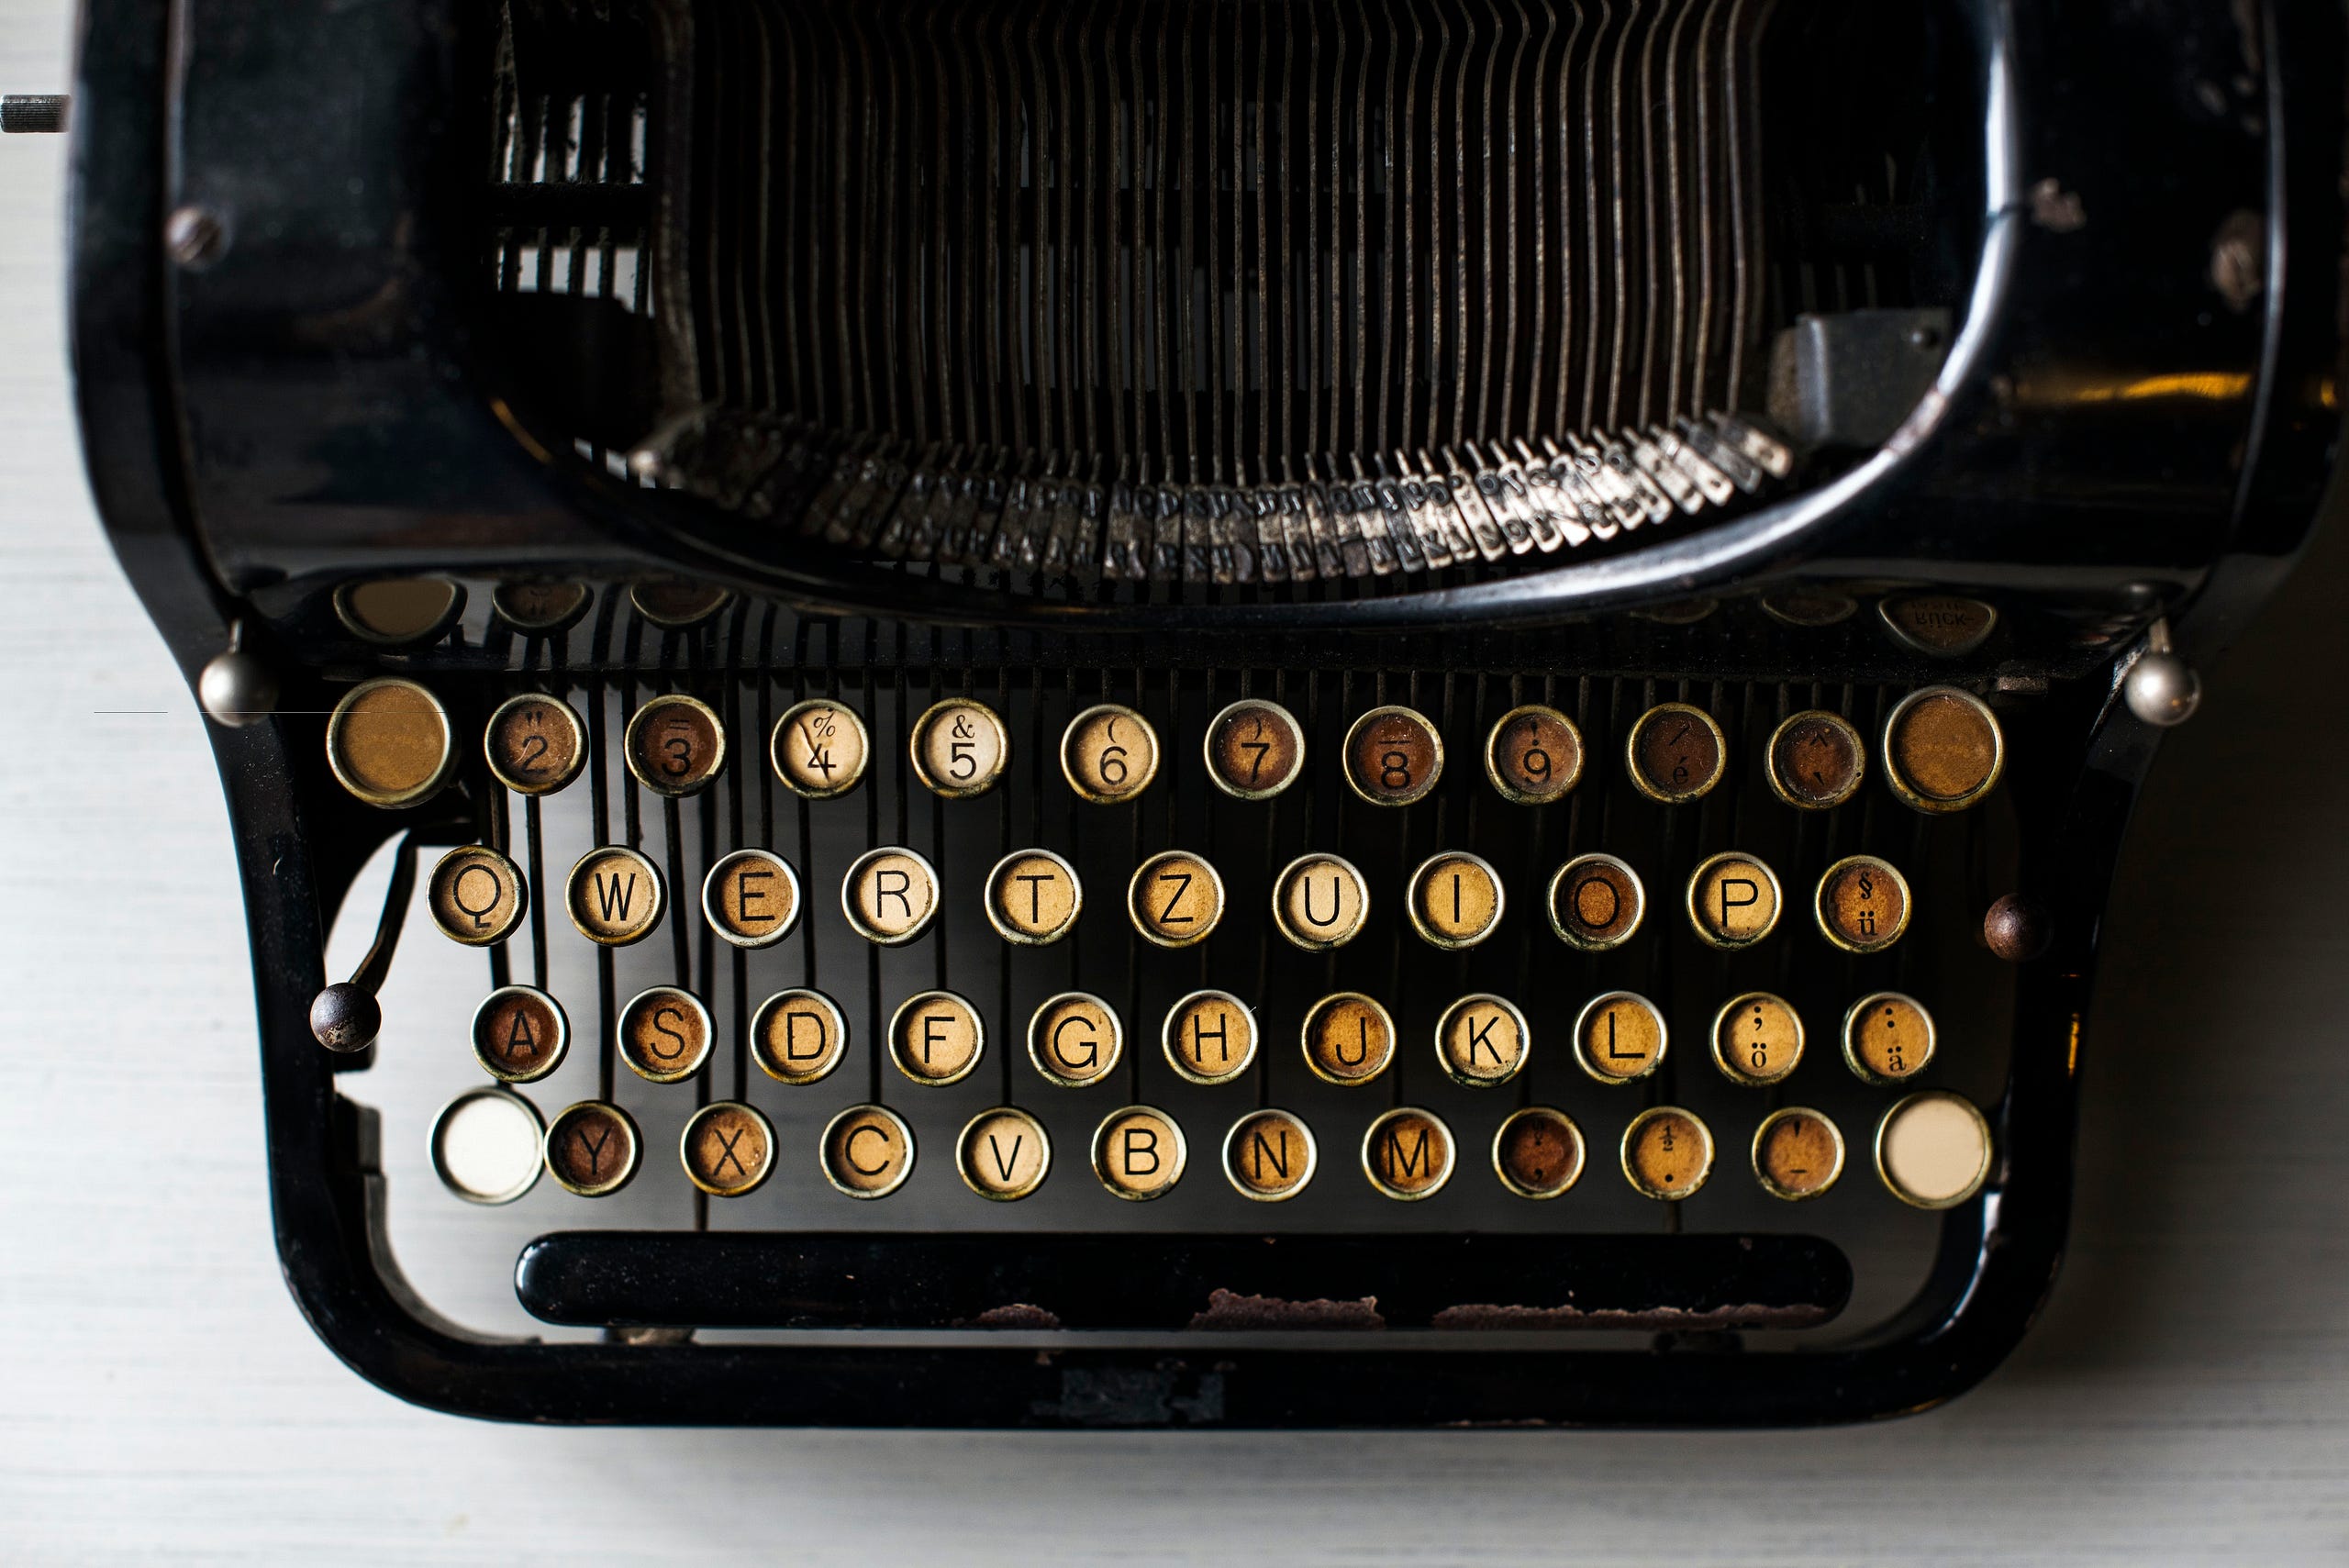 Photo: [Teddy Rawpixel](https://www.rawpixel.com/user/15024) via [Rawpixel](https://www.rawpixel.com/image/100189/free-photo-image-write-typewriter-fashion)An antique black typewriter with aged yellow keys.